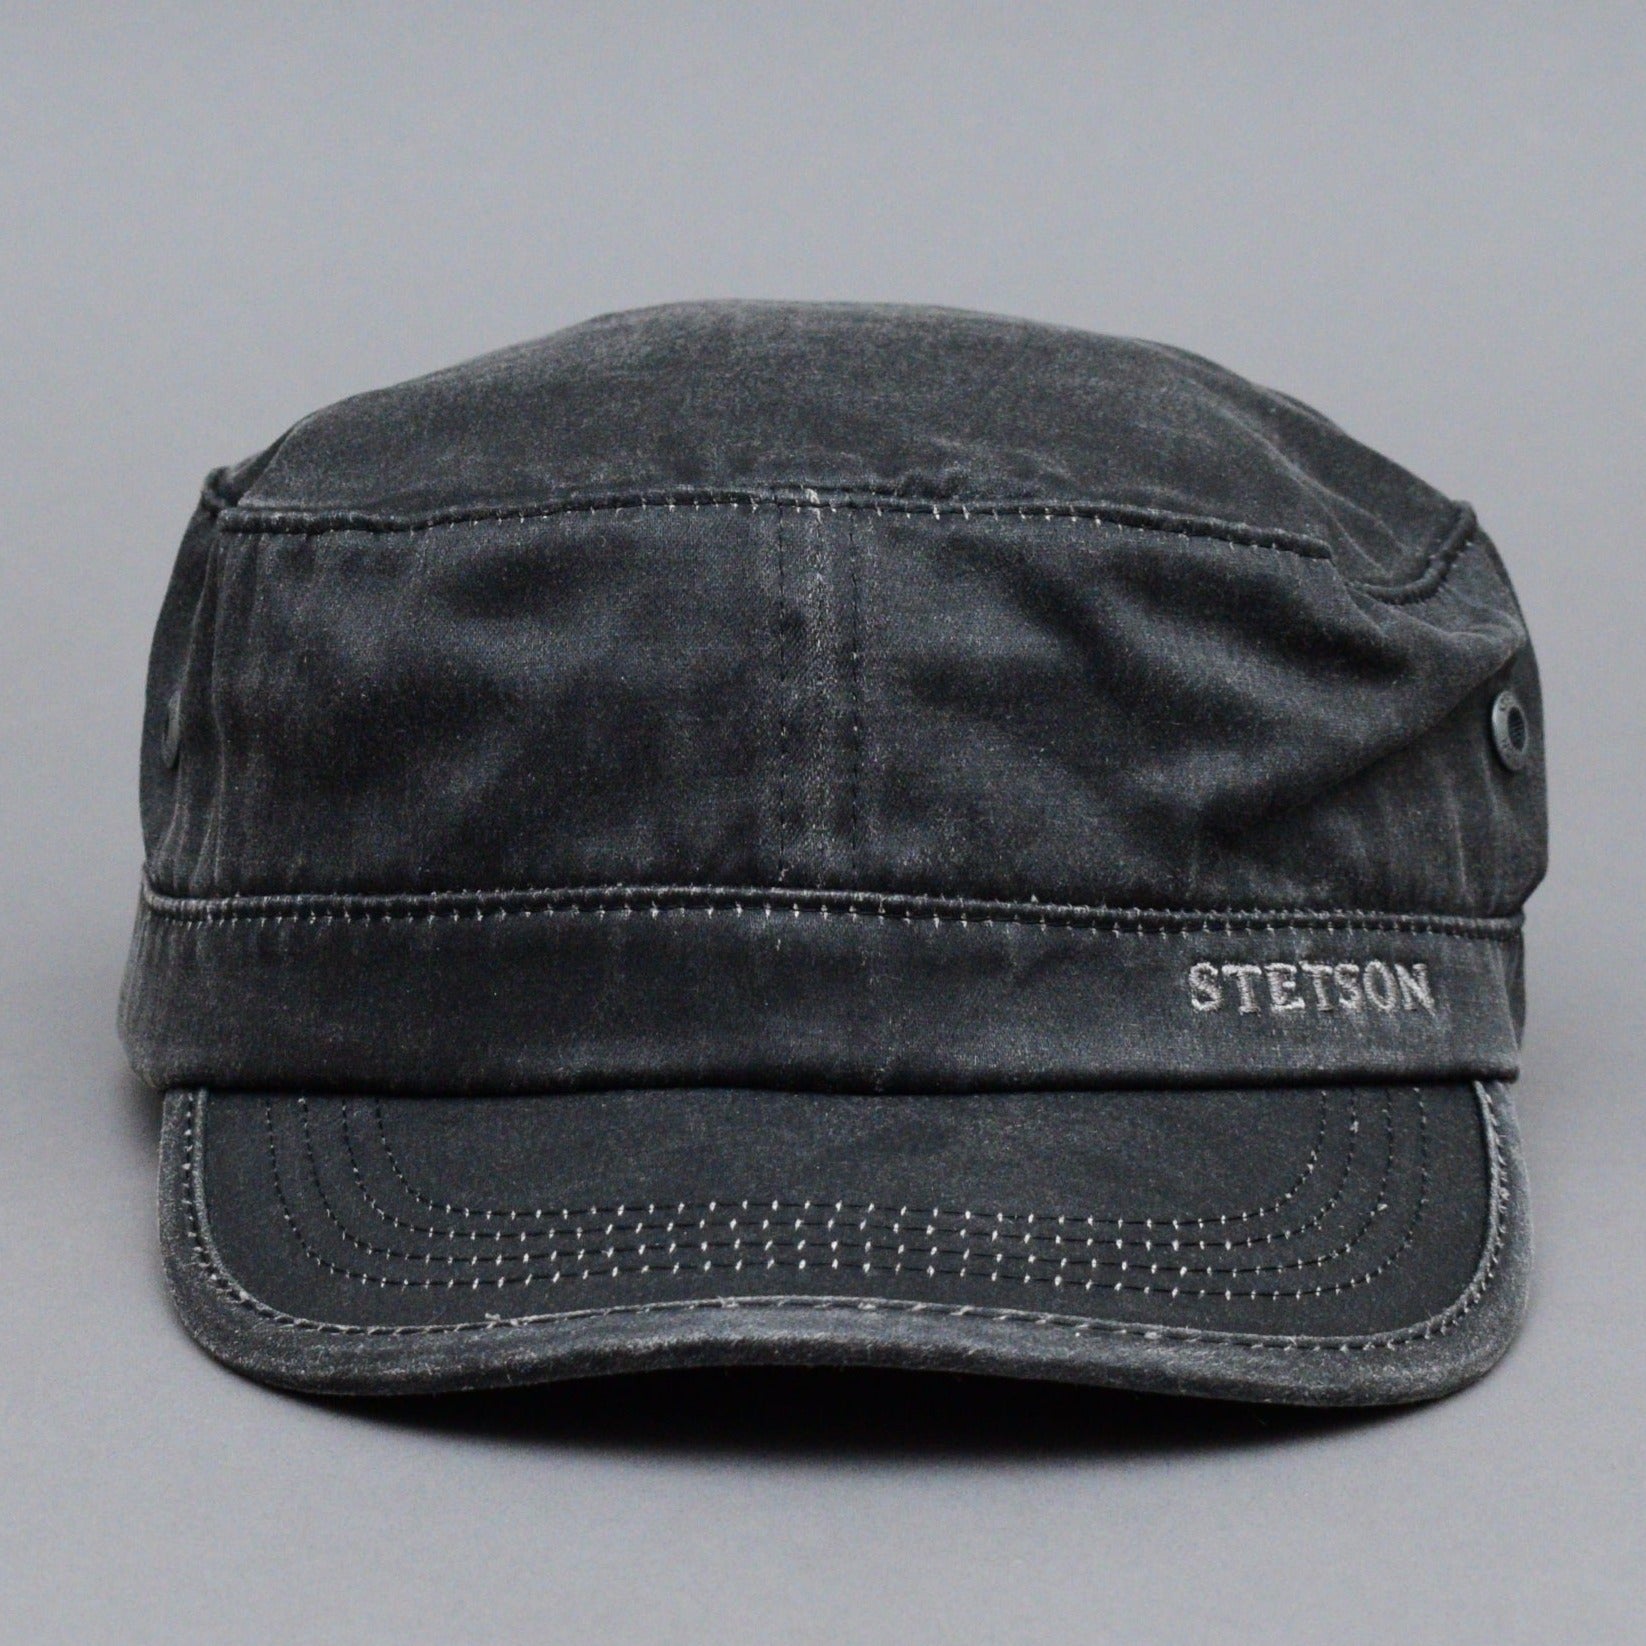 Stetson - Army Cap CO/PE - Adjustable - Black